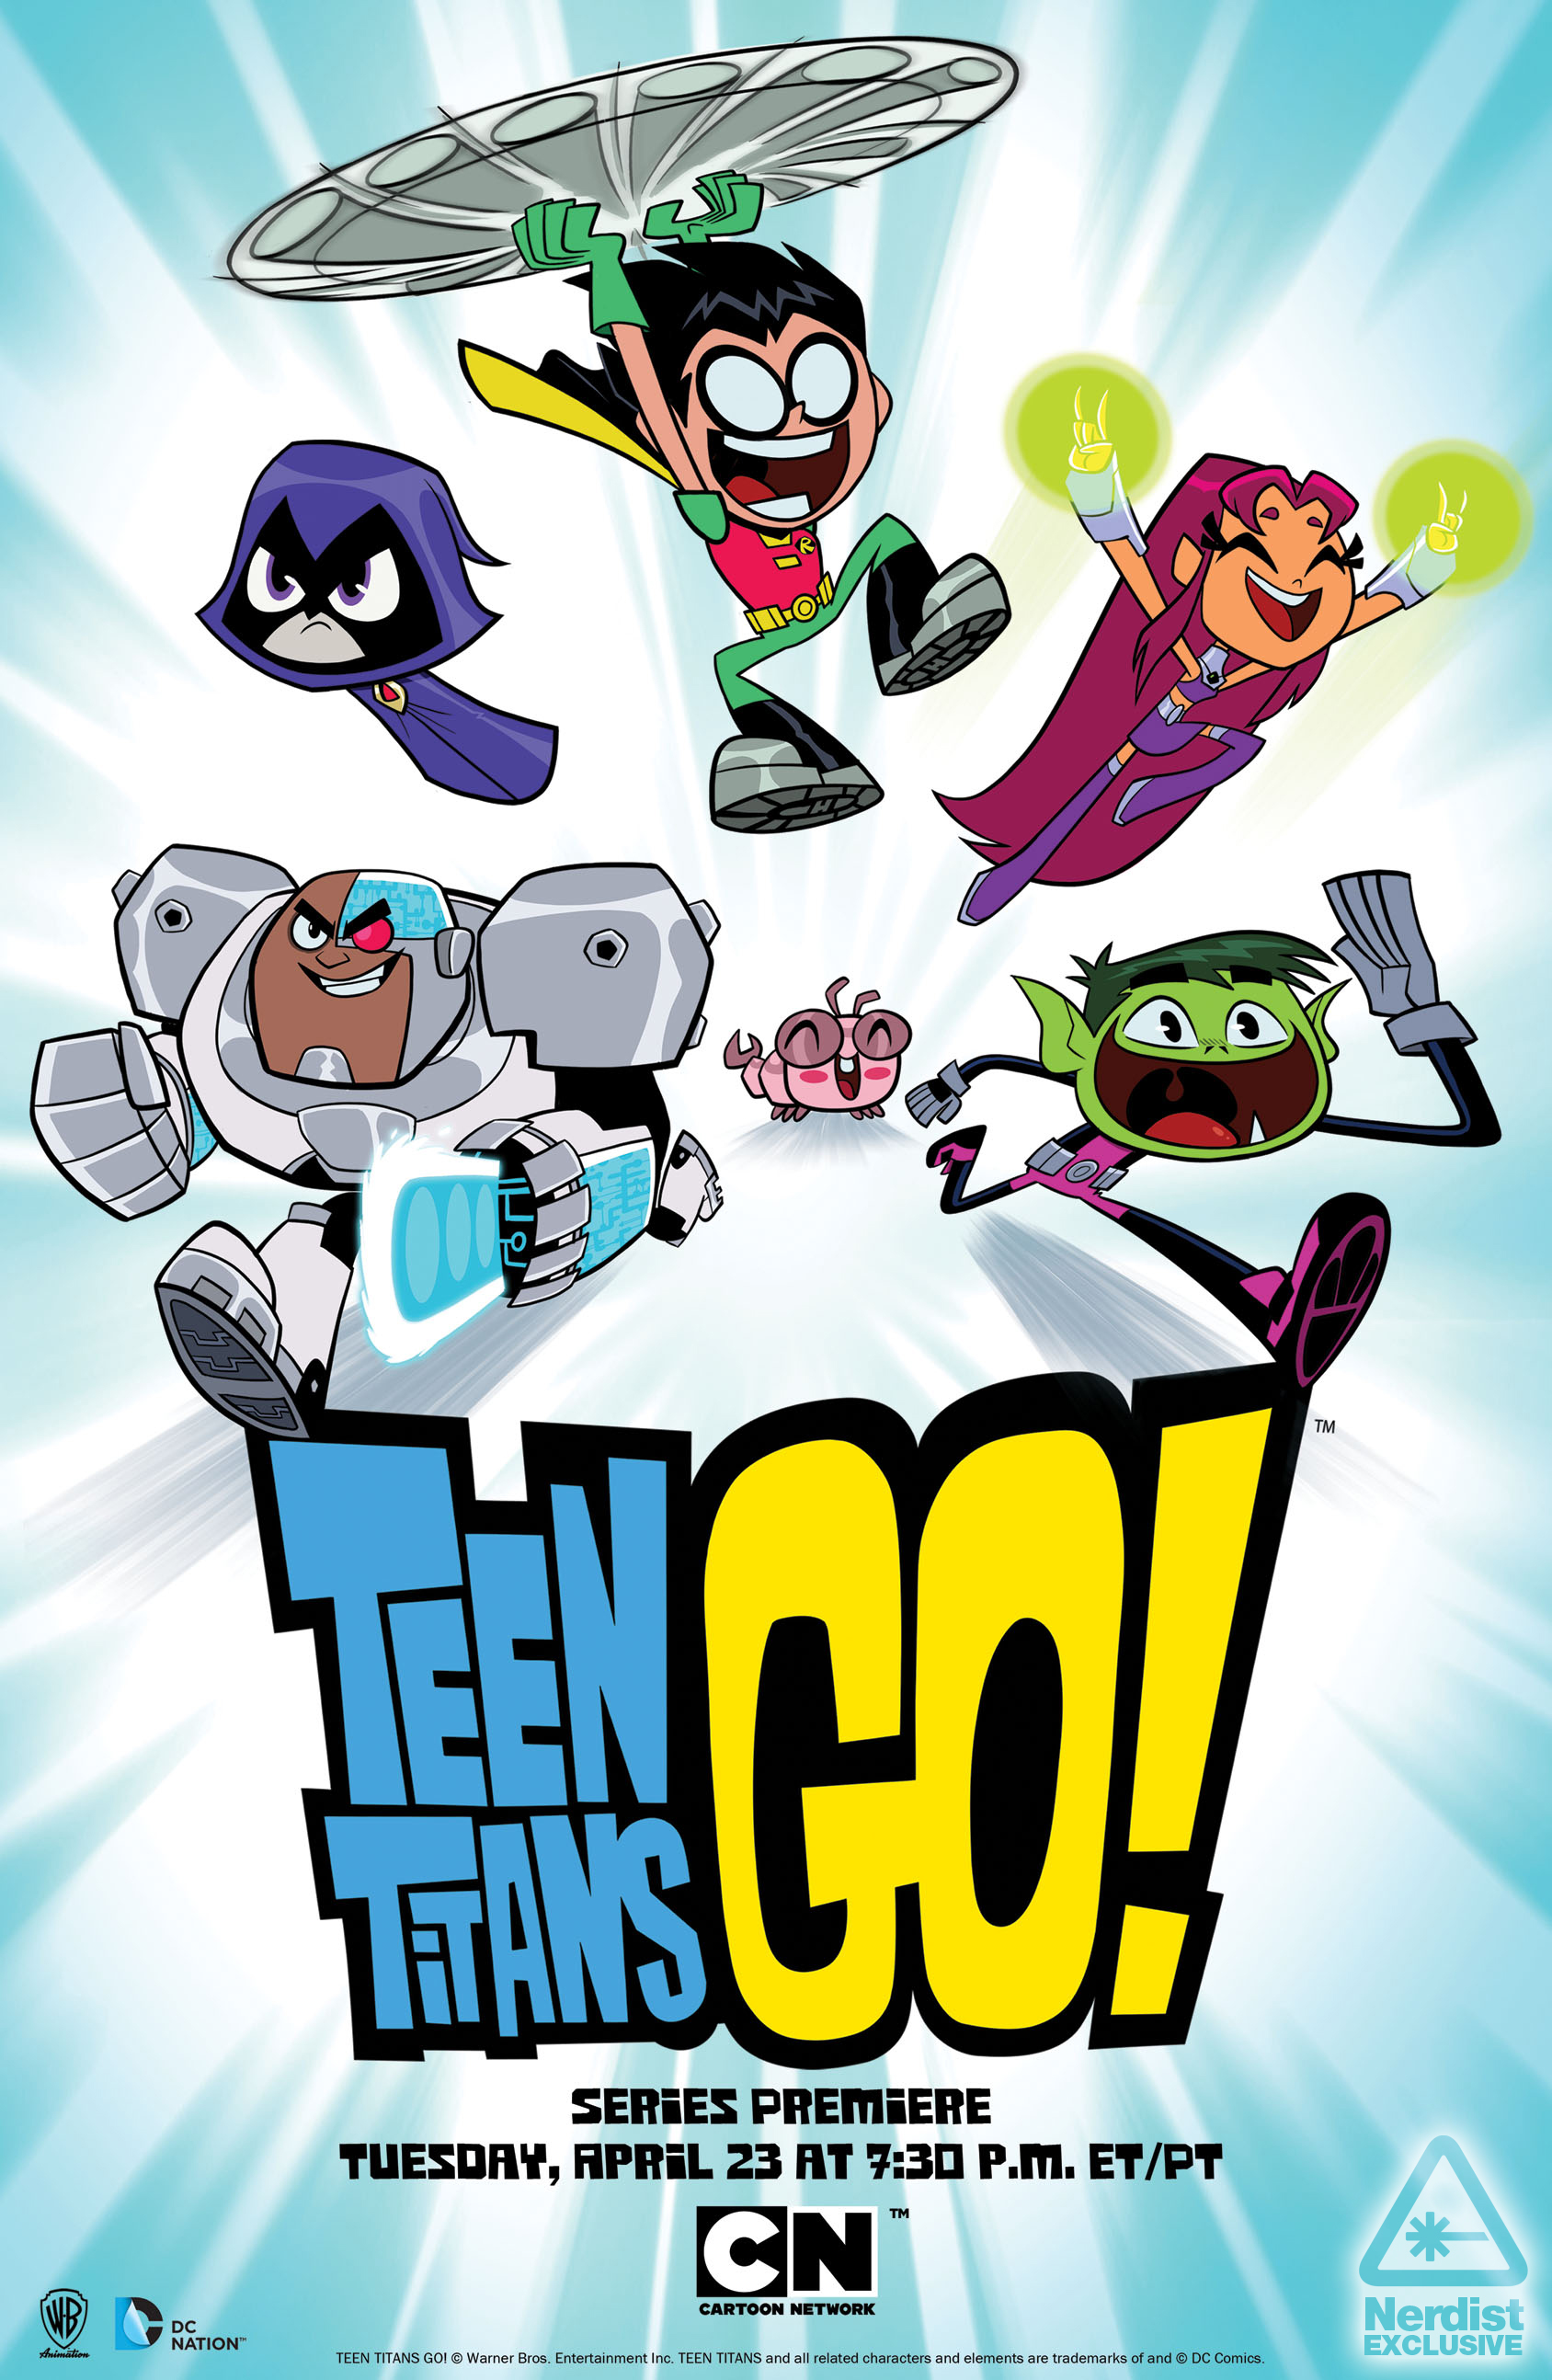 Teeny Titans - Teen Titans Go! on the App Store